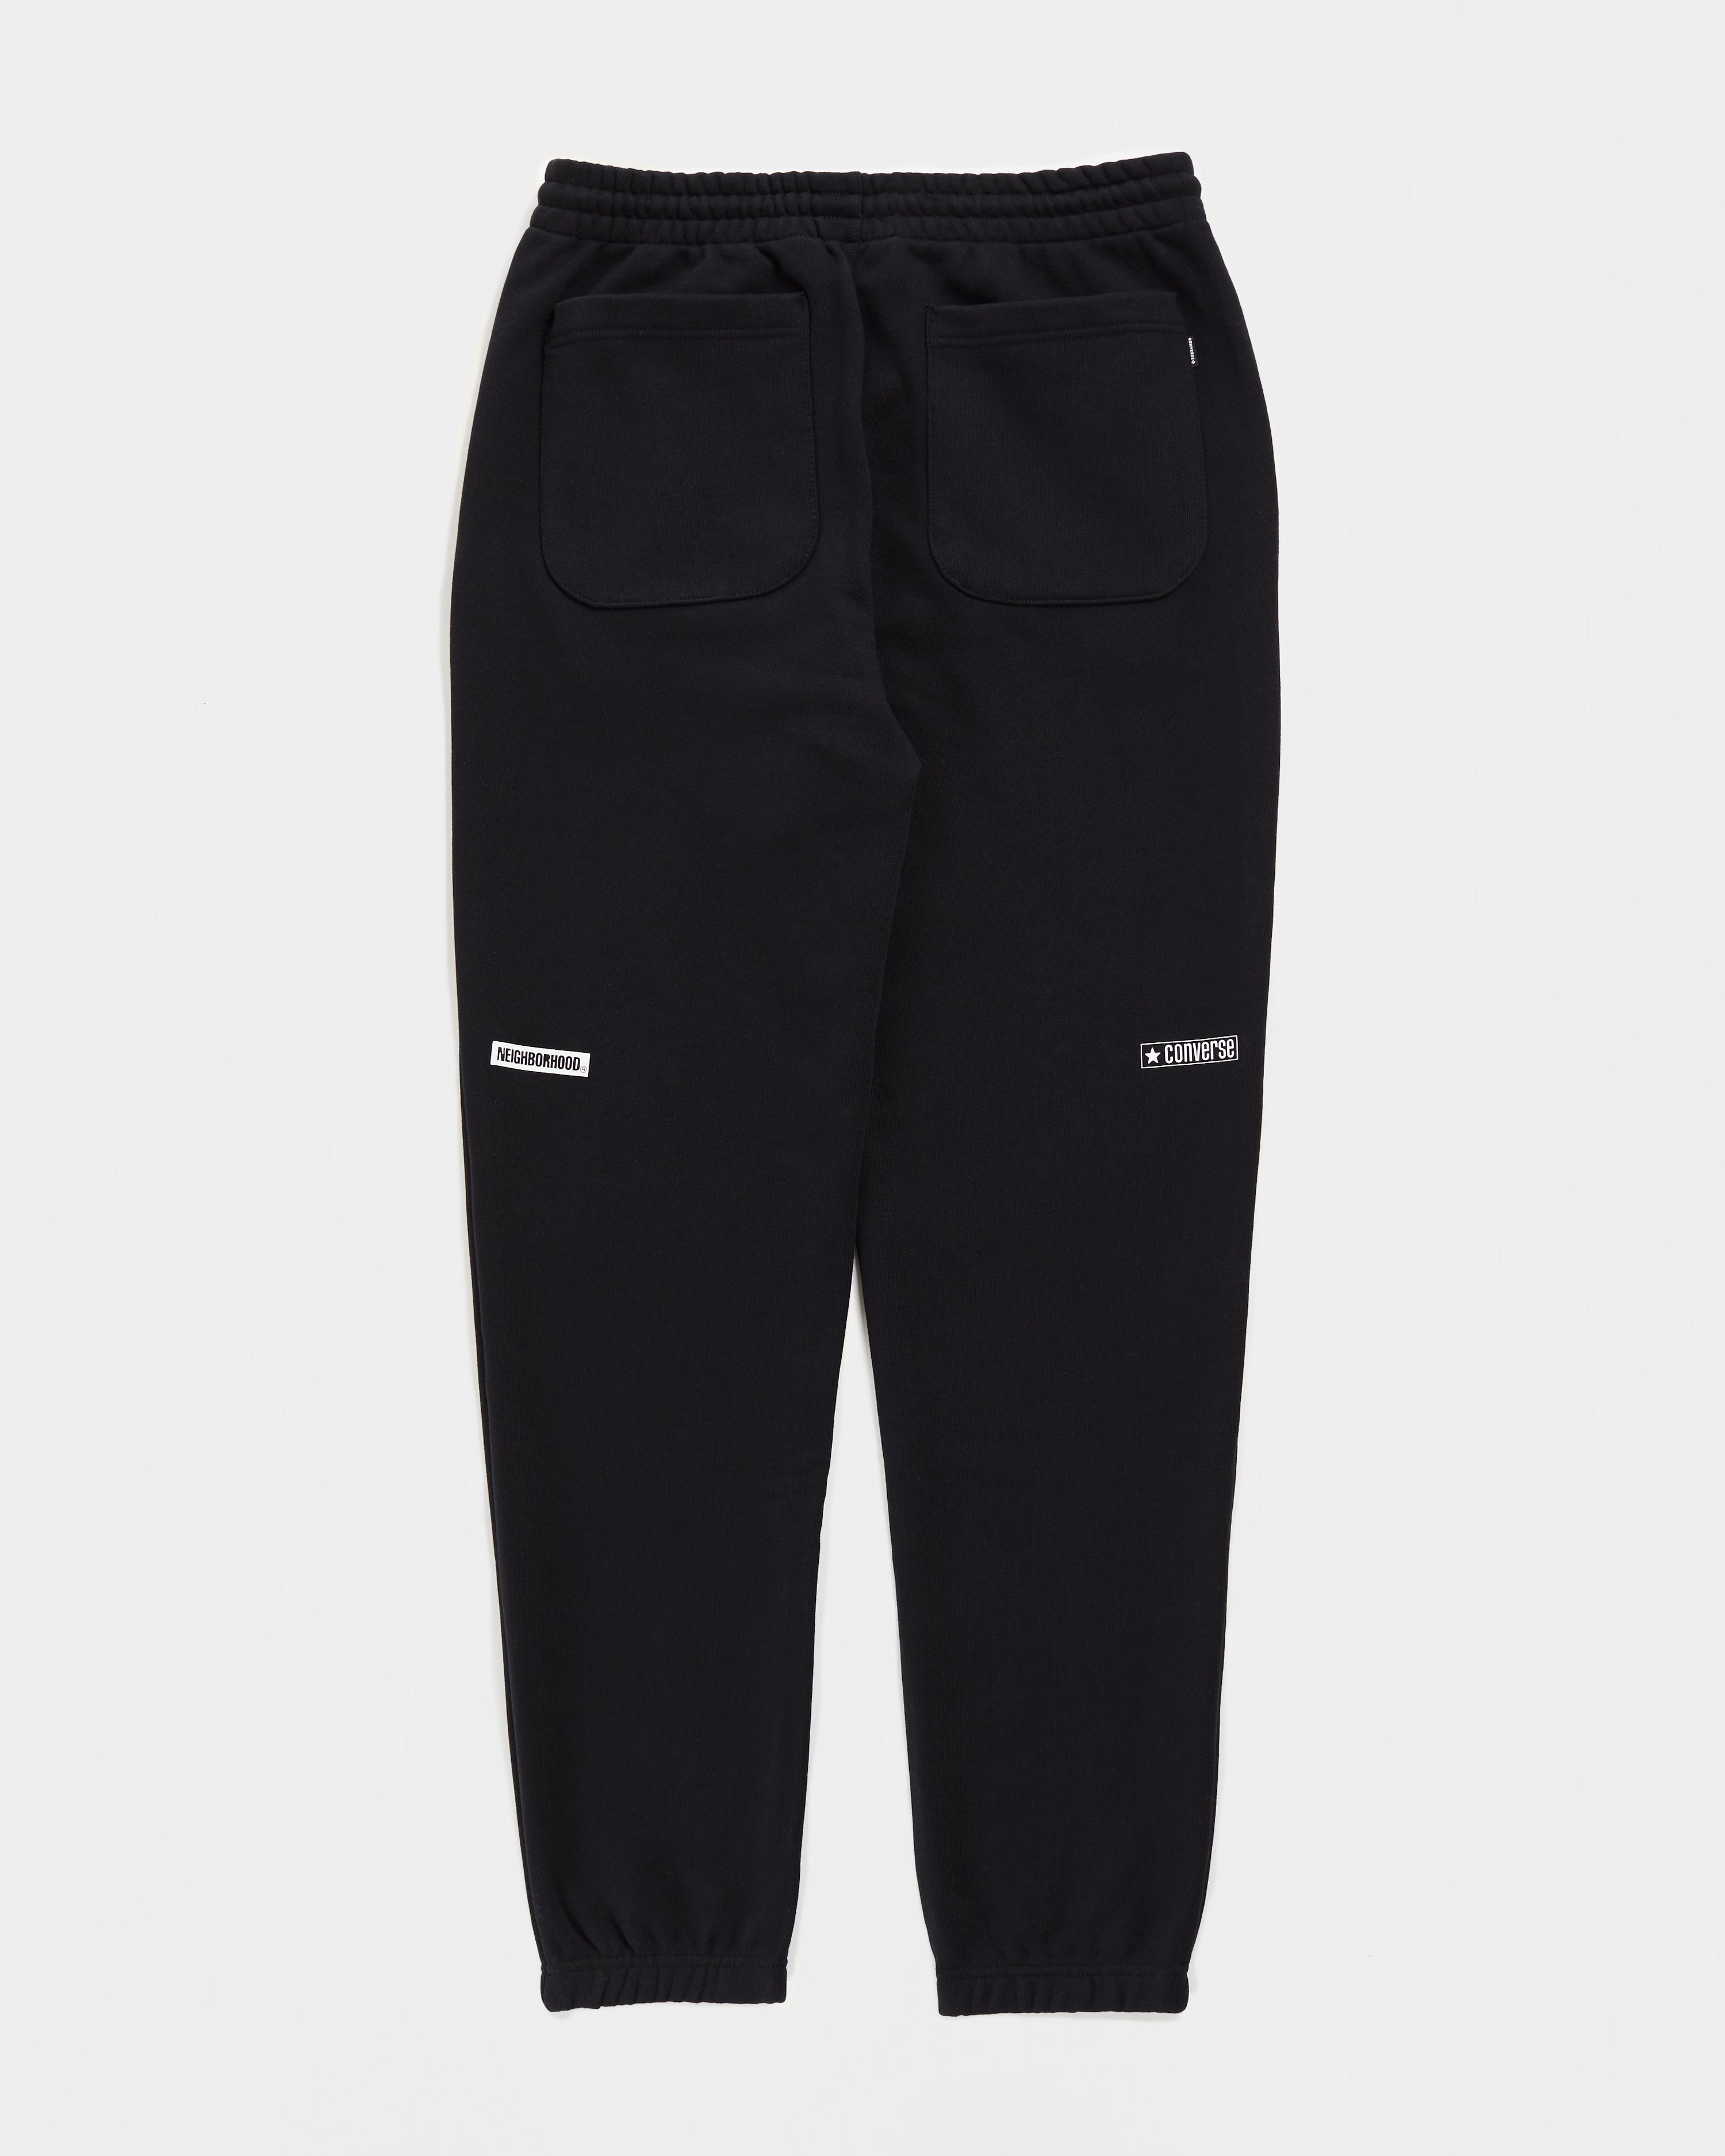 NBHD x Converse - Black Sweatpants - Clothing - Black - Image 2